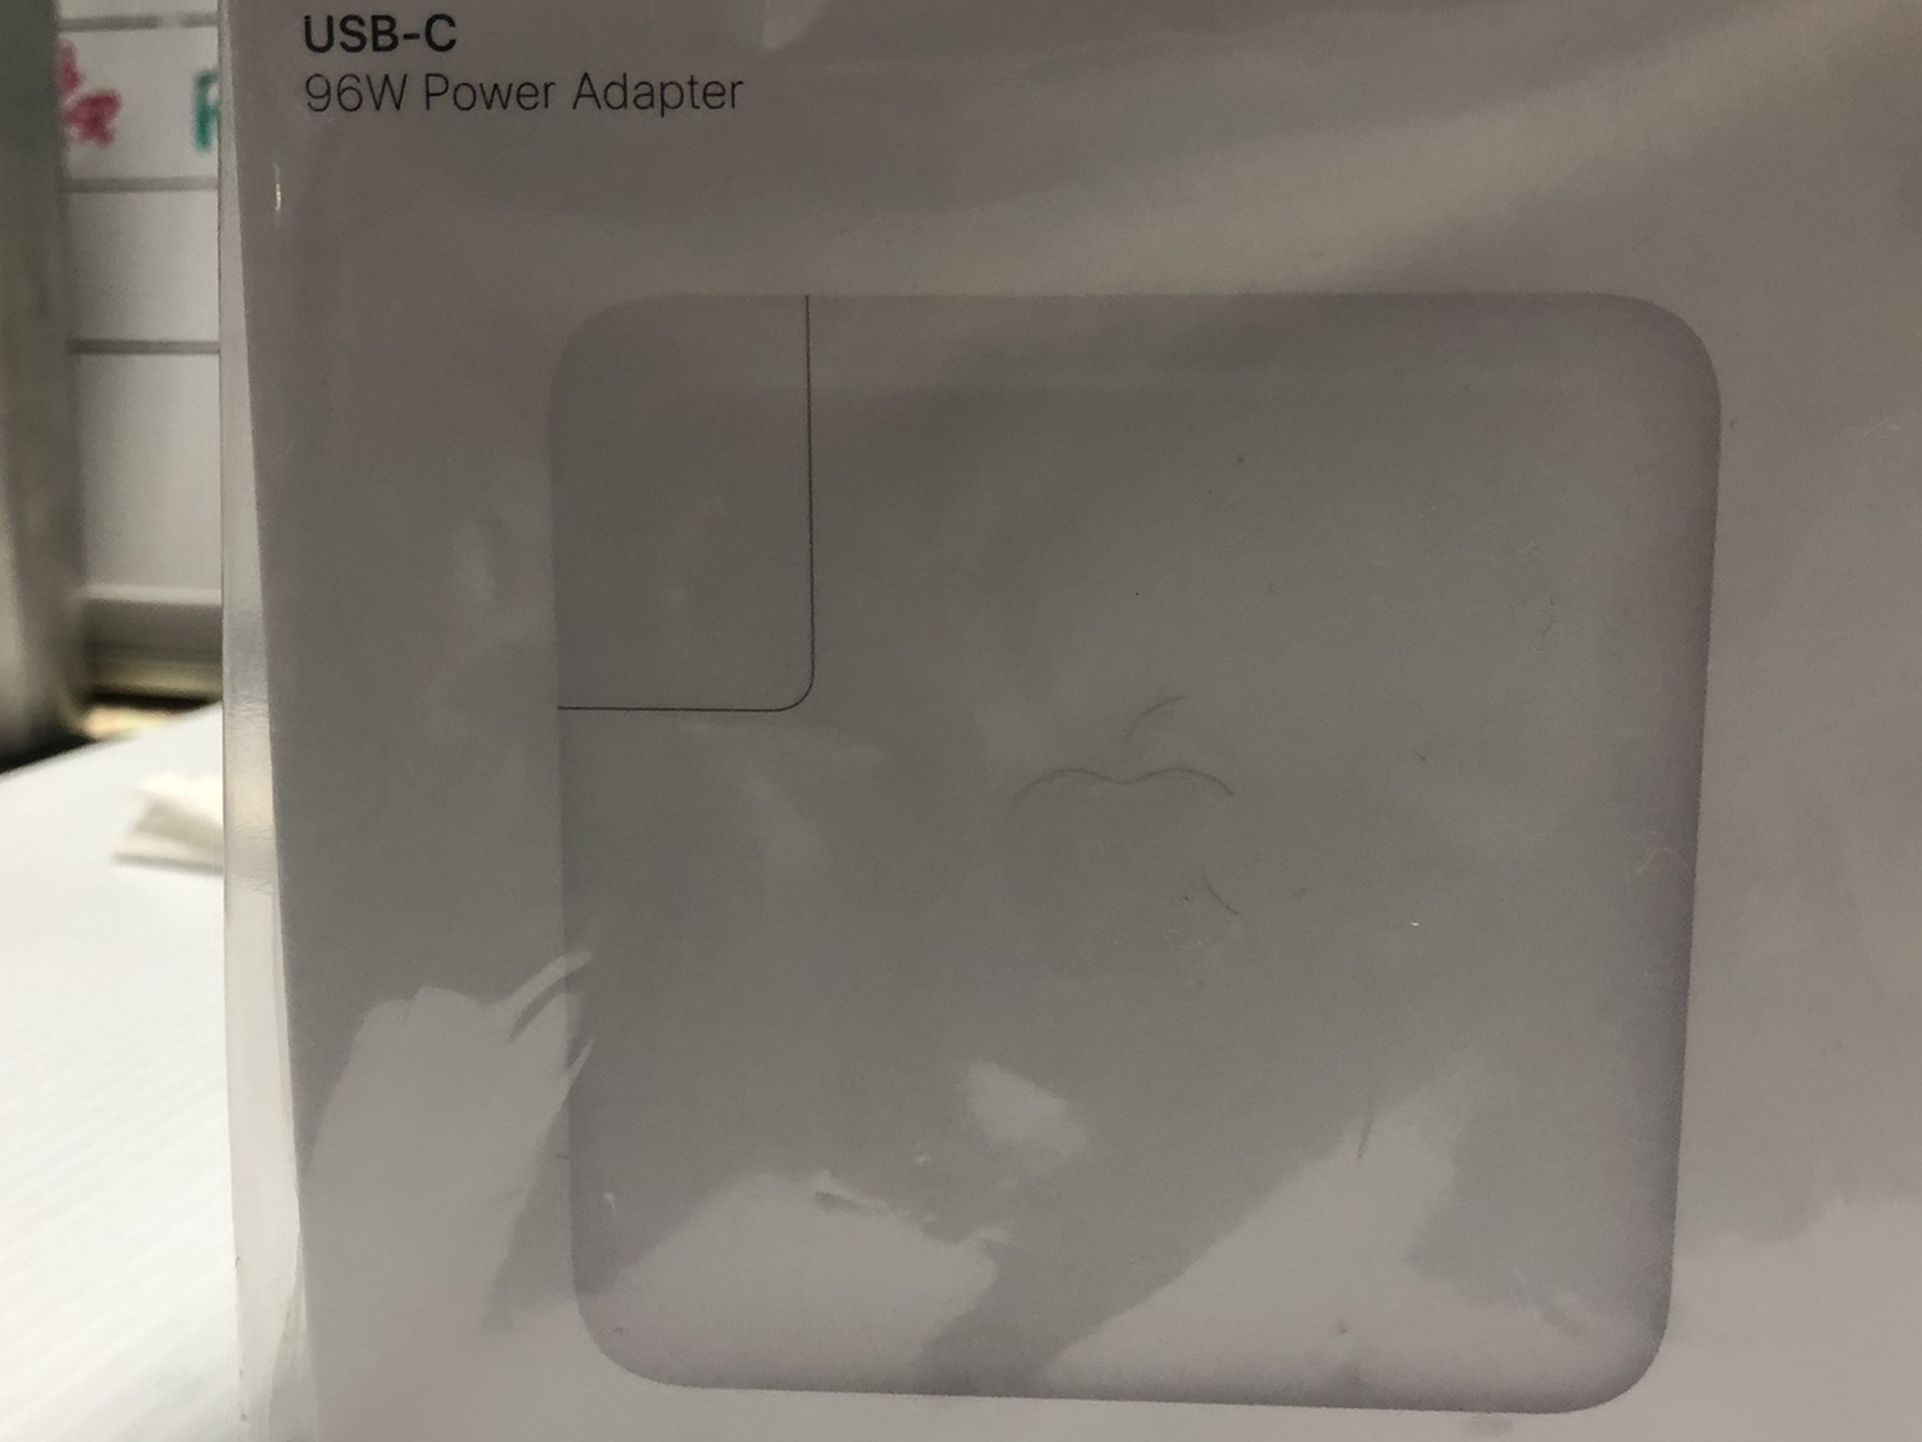 MacBook Pro 15” Original Charger 96W C USB